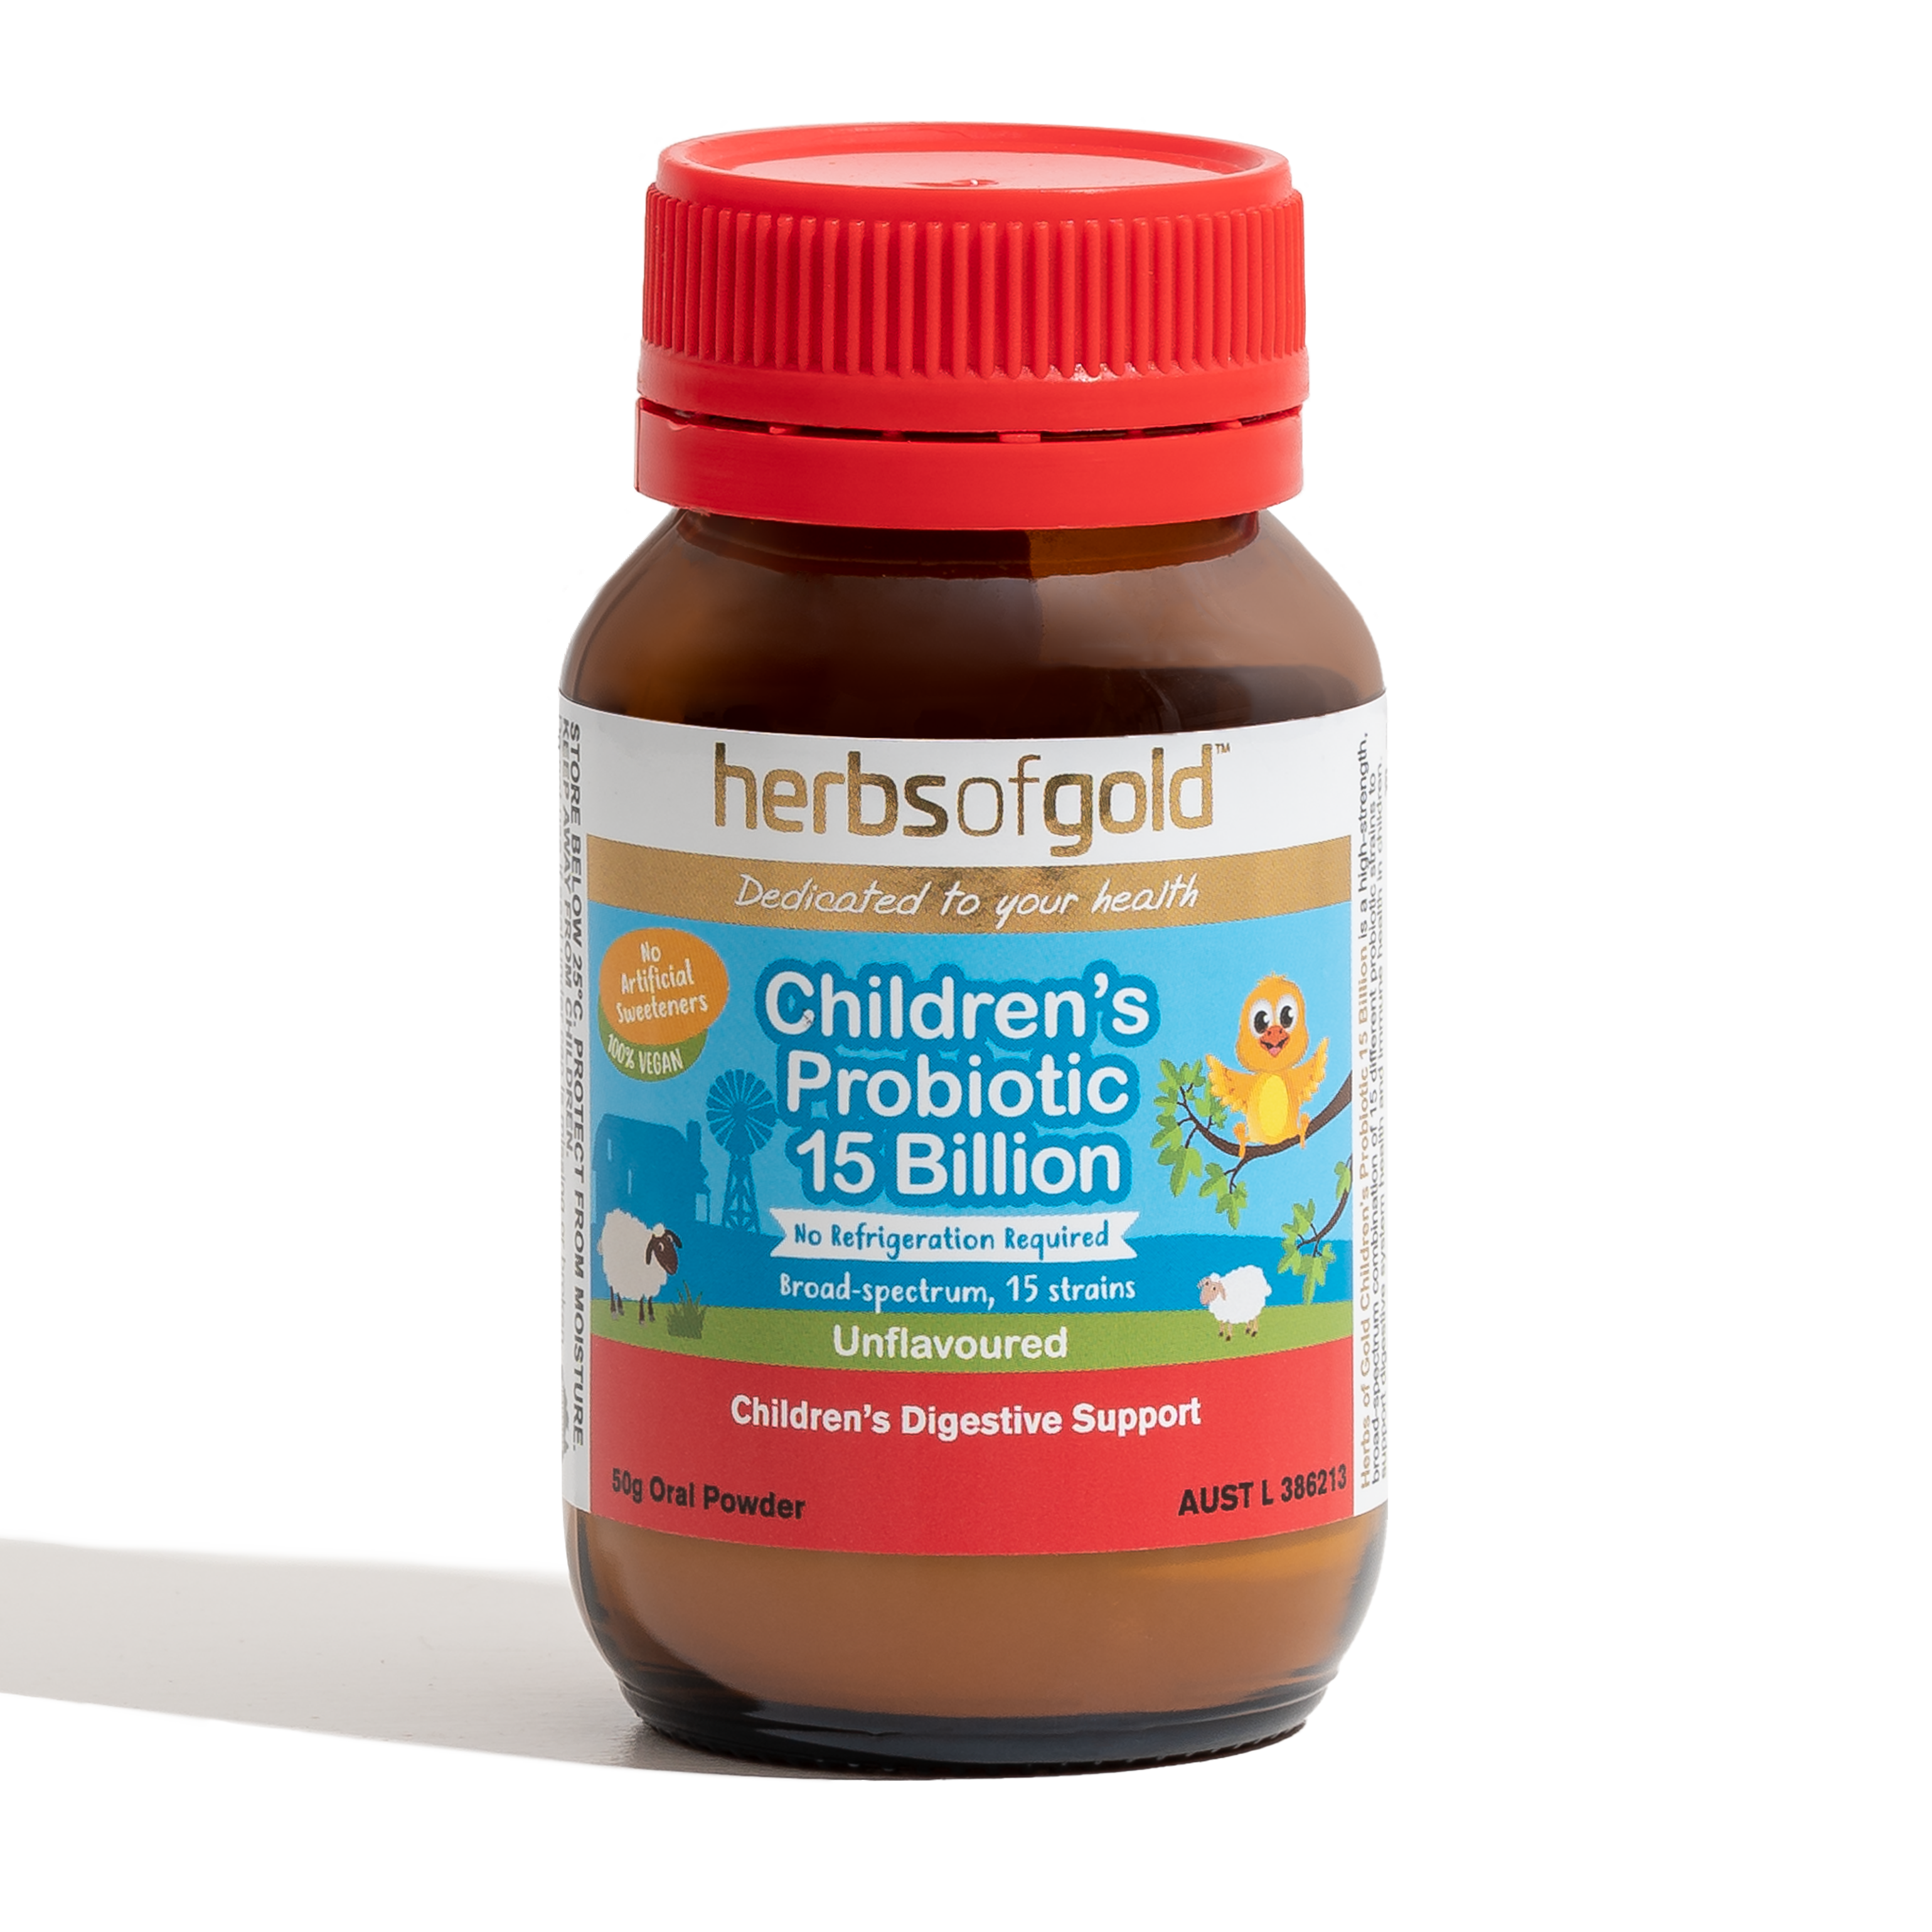 Children's Probiotic 15 Billion